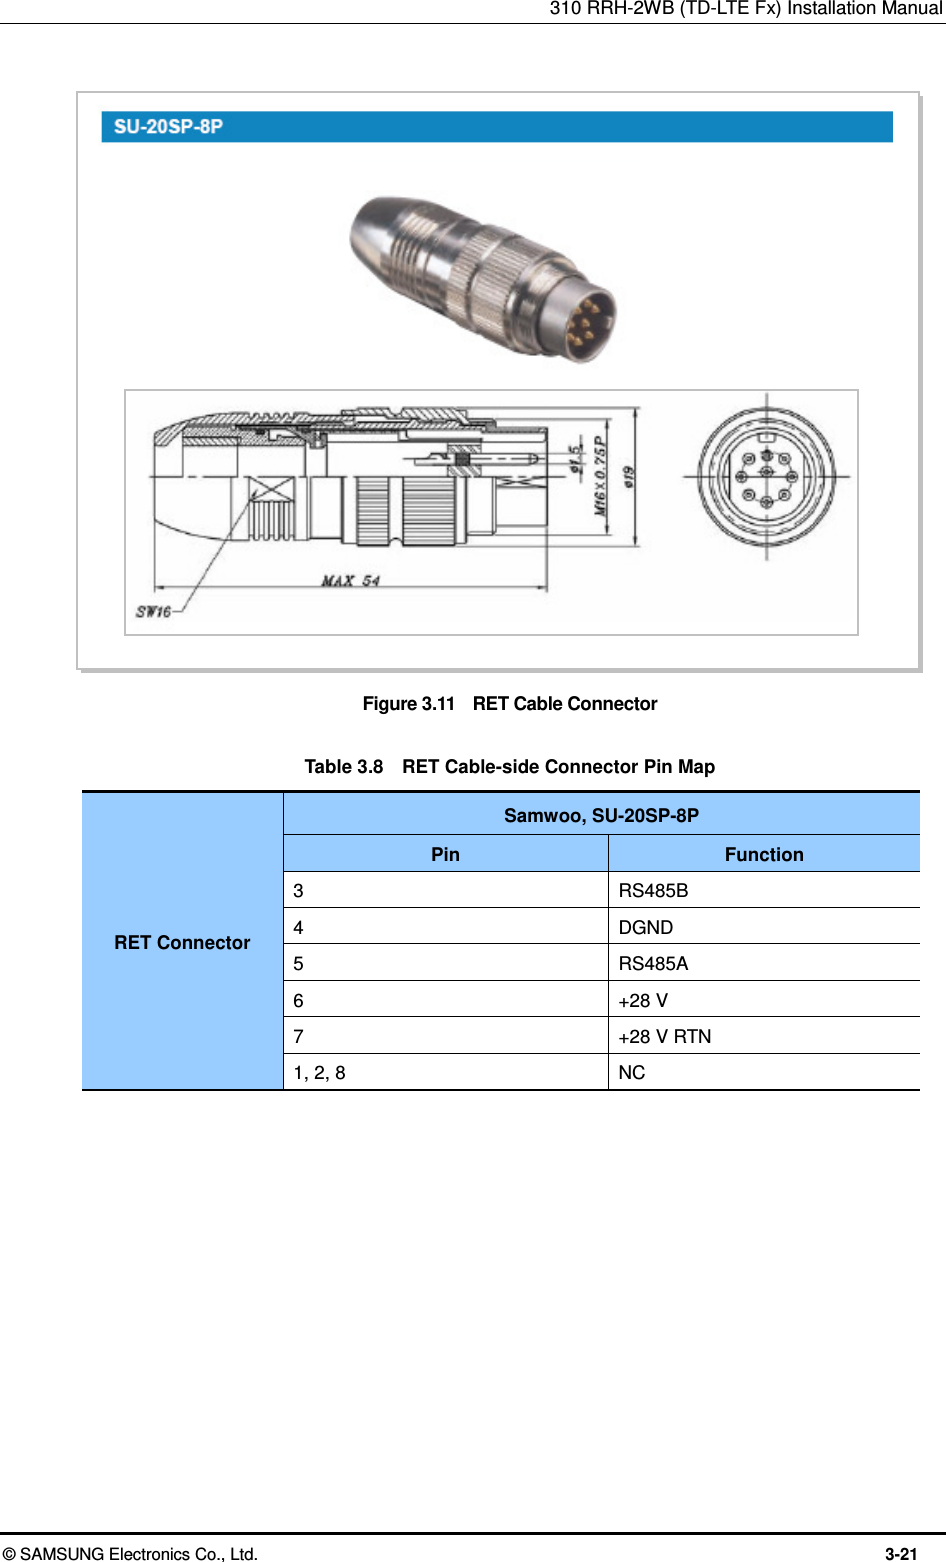 310 RRH-2WB (TD-LTE Fx) Installation Manual  © SAMSUNG Electronics Co., Ltd.  3-21  Figure 3.11    RET Cable Connector  Table 3.8    RET Cable-side Connector Pin Map RET Connector Samwoo, SU-20SP-8P Pin Function 3 RS485B 4 DGND 5 RS485A 6 +28 V 7 +28 V RTN 1, 2, 8 NC  